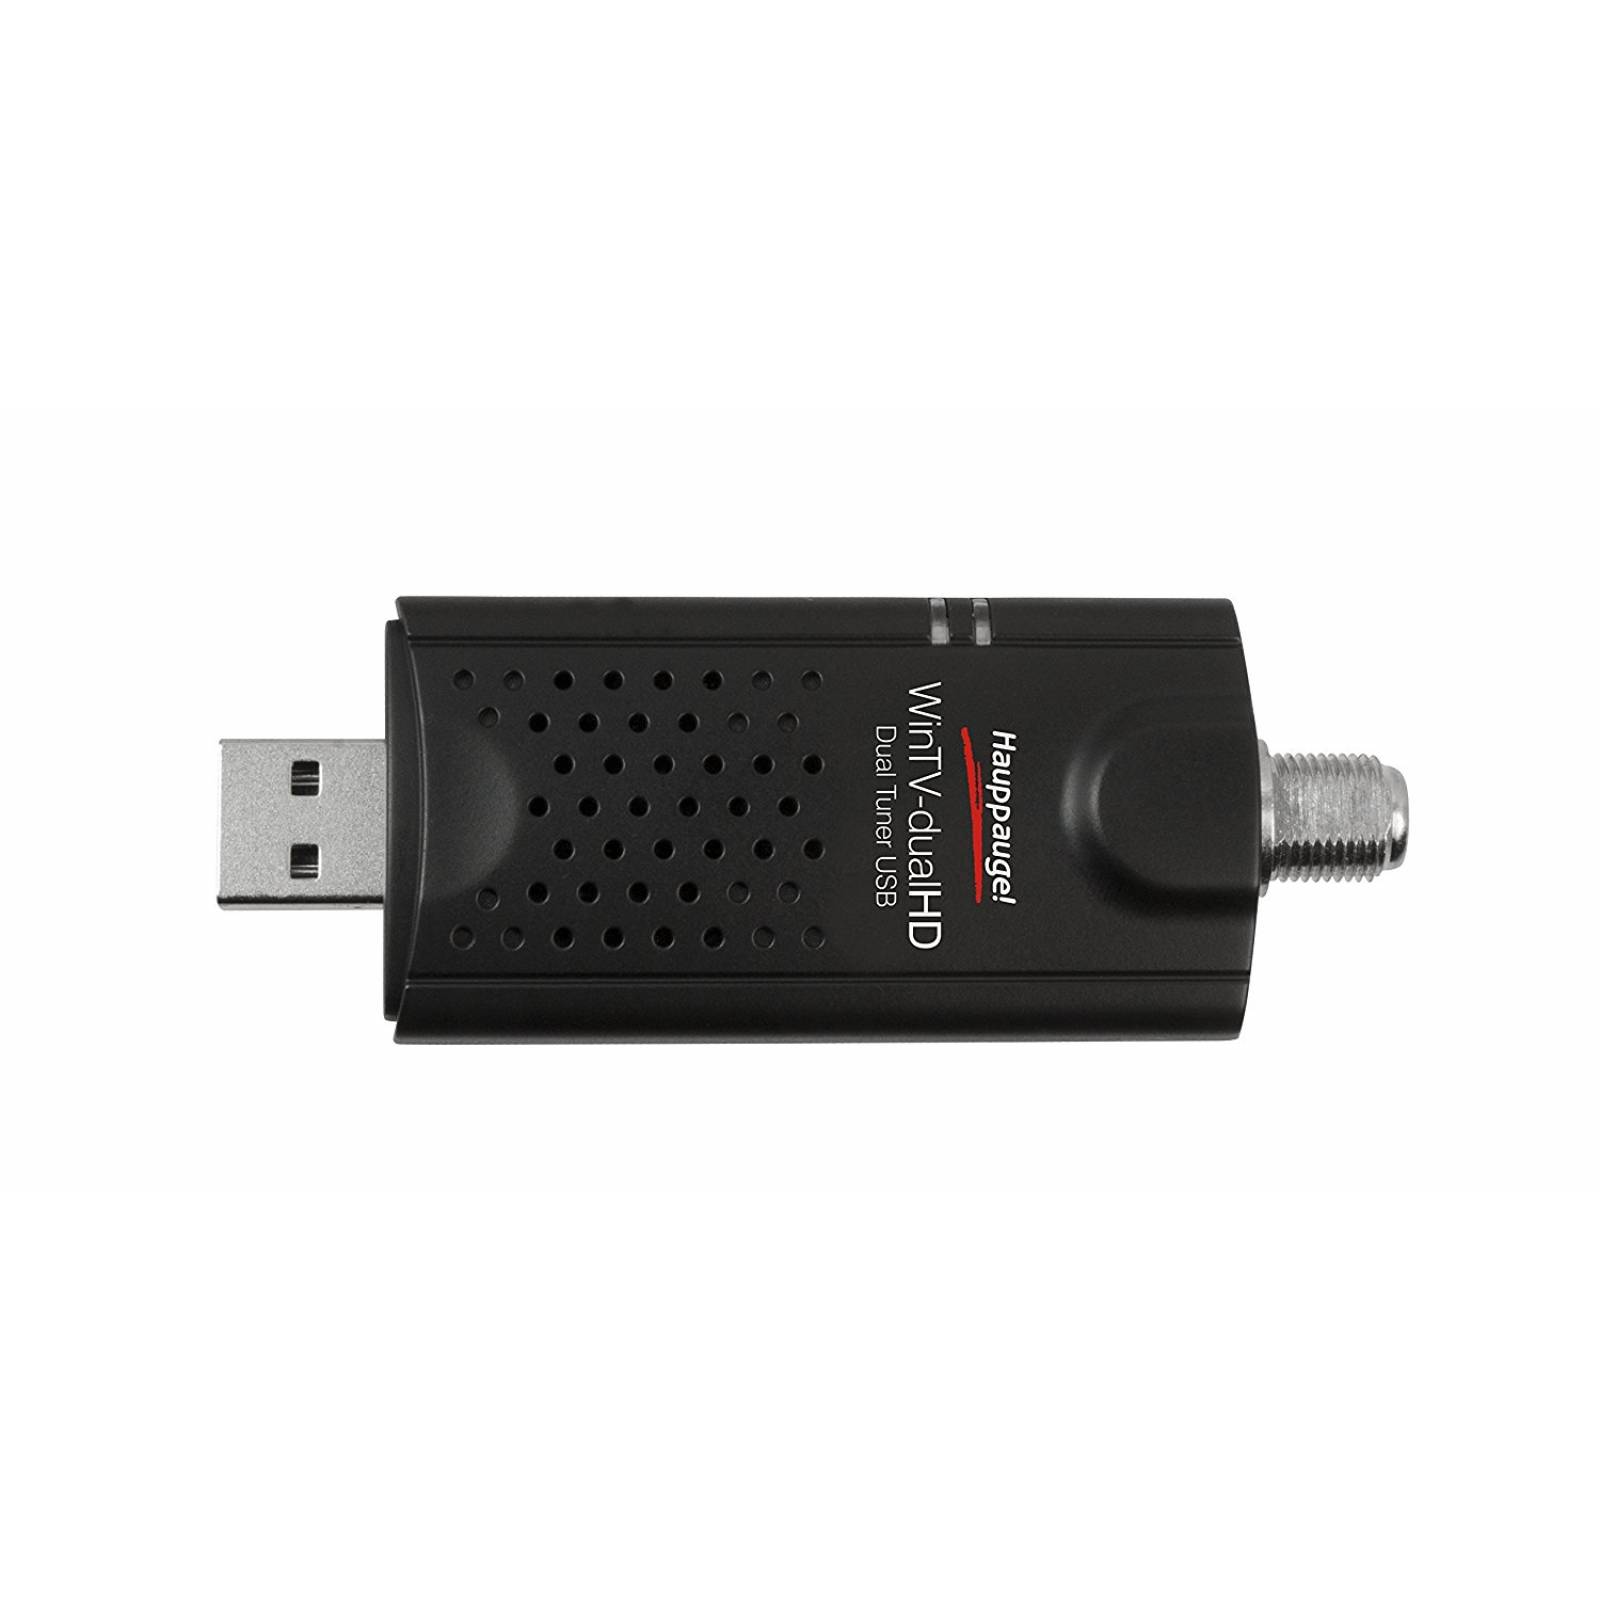 HAUPPAUGE WinTV-DualHD Dual USB 2.0 HD TV Tuner Windows PC 1